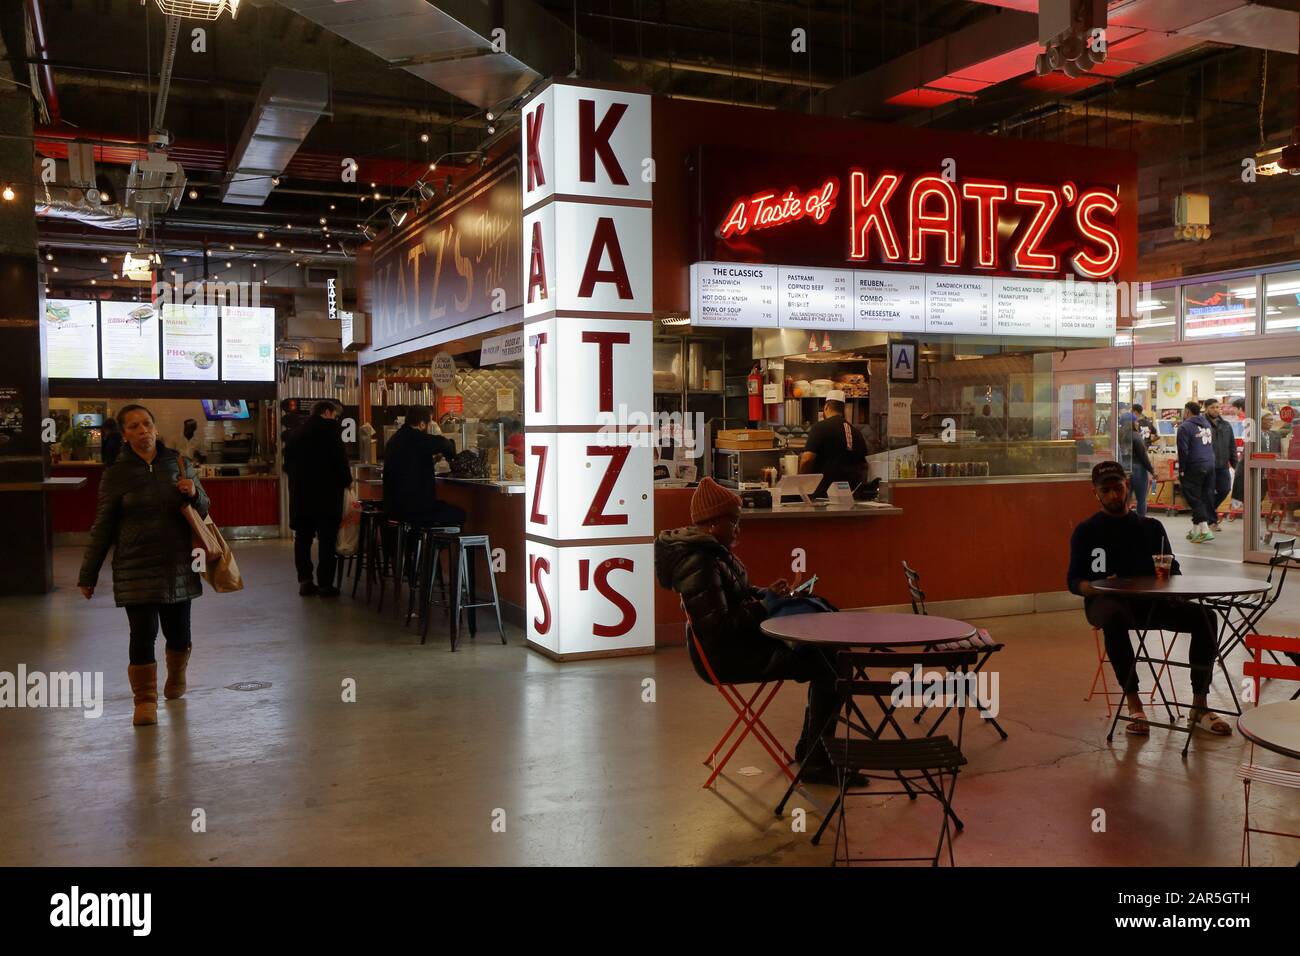 Un Assaggio di Katz's al DeKalb Market Hall di Brooklyn, New York. Foto Stock